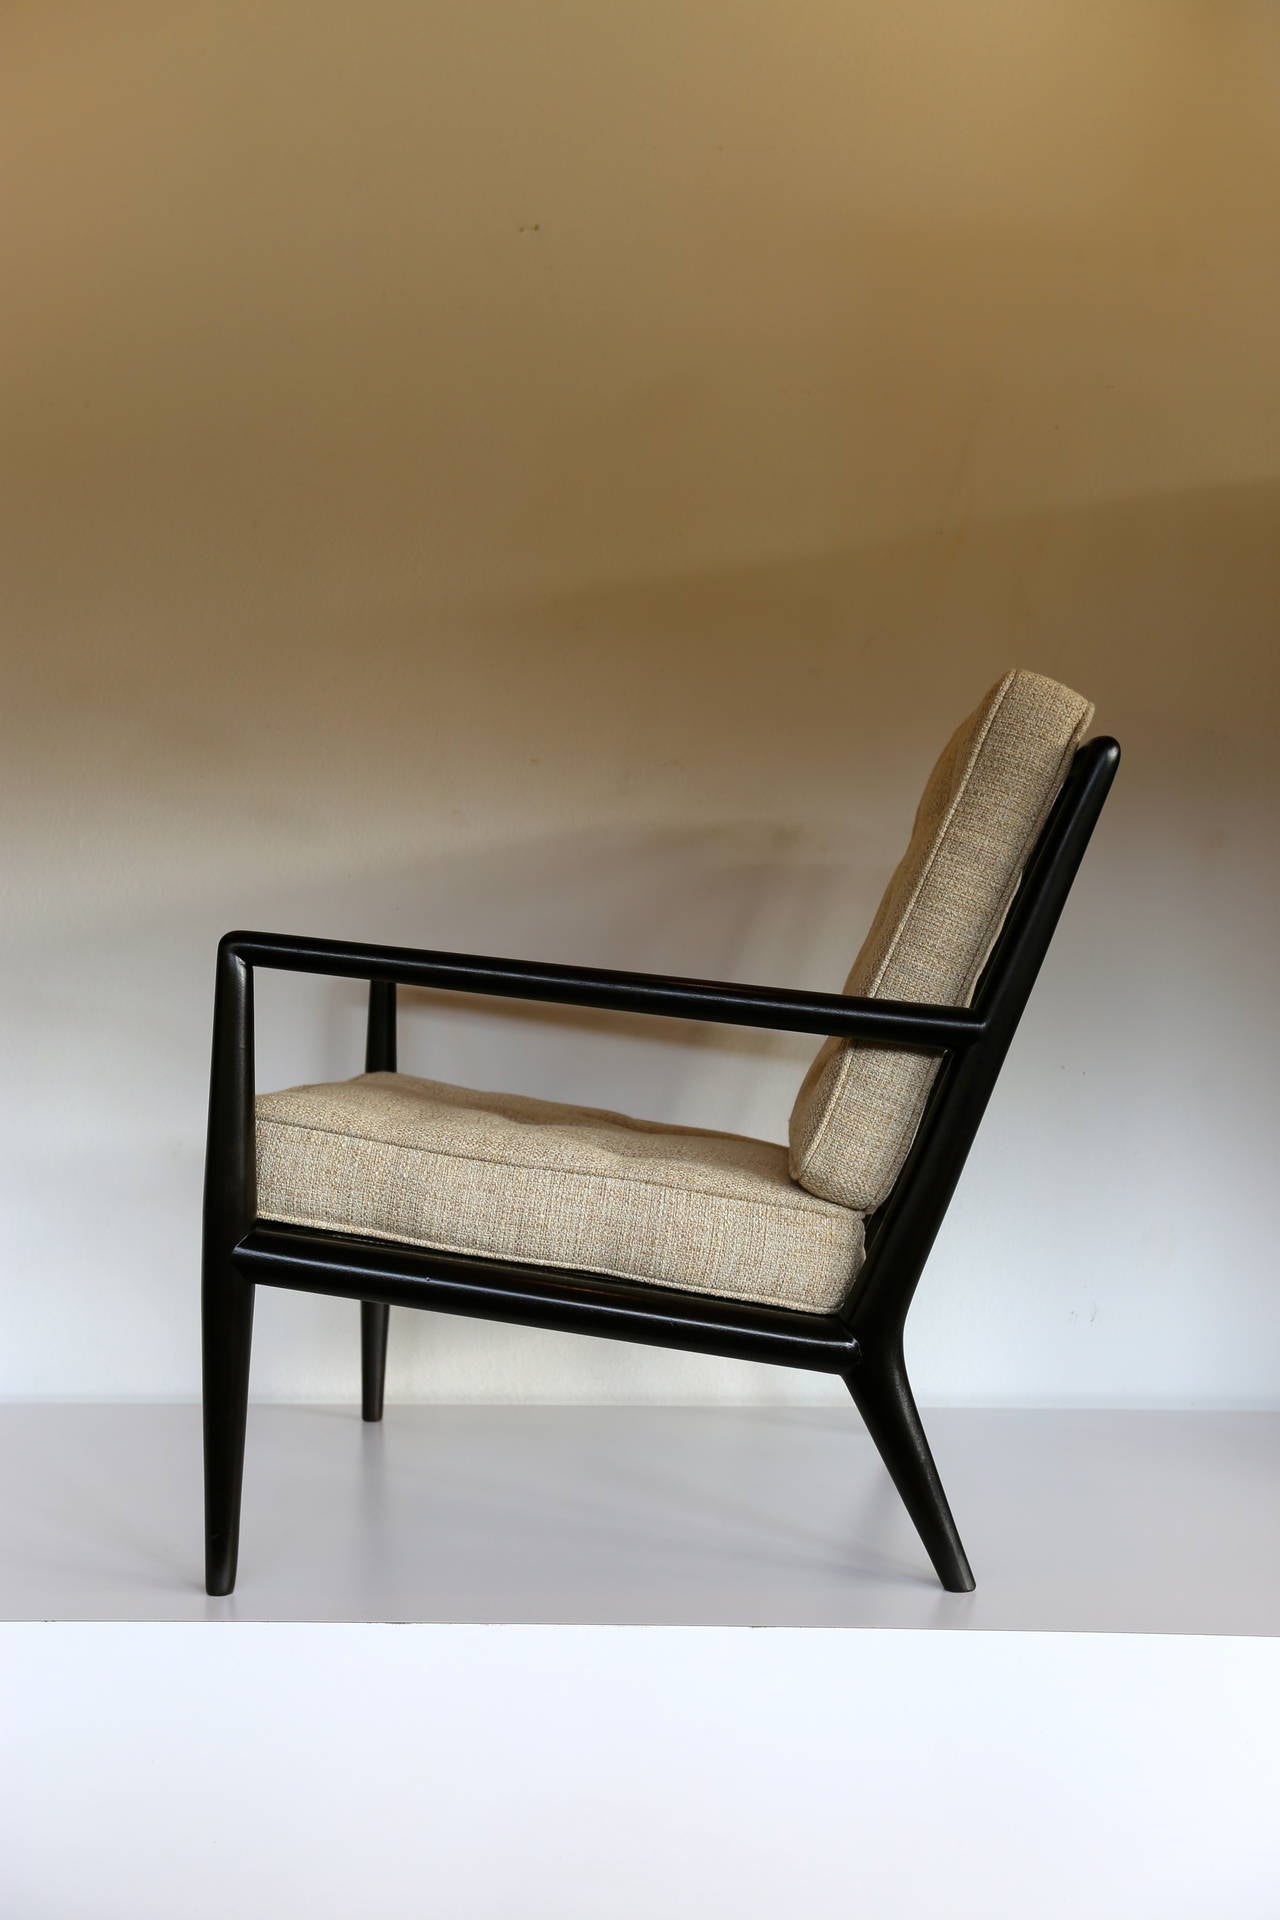 20th Century Lounge Chair by T.H. Robsjohn-Gibbings for Widdicomb